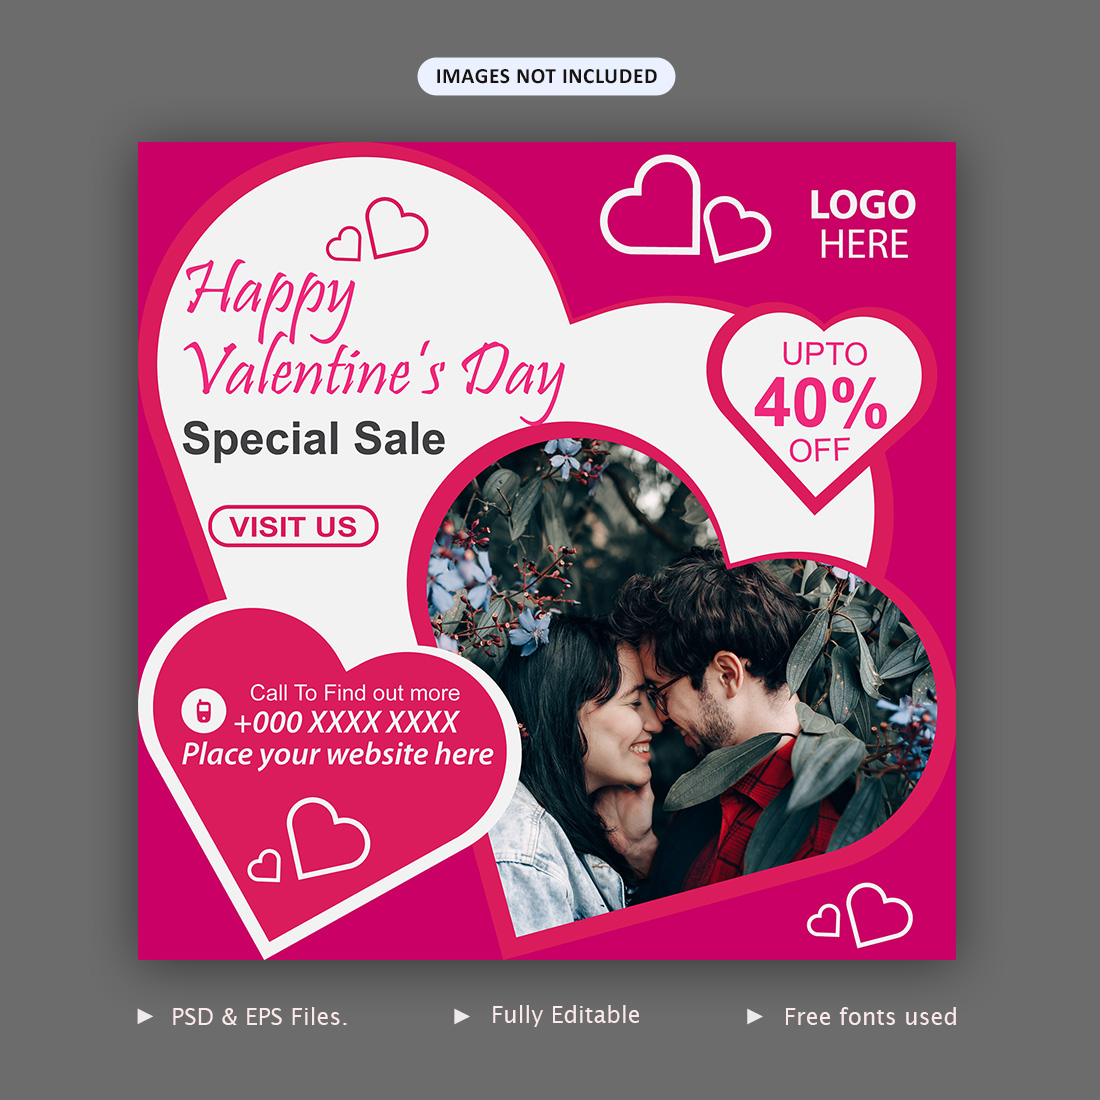 Happy Valentine's Day Special Sale Social Media Post Cover.